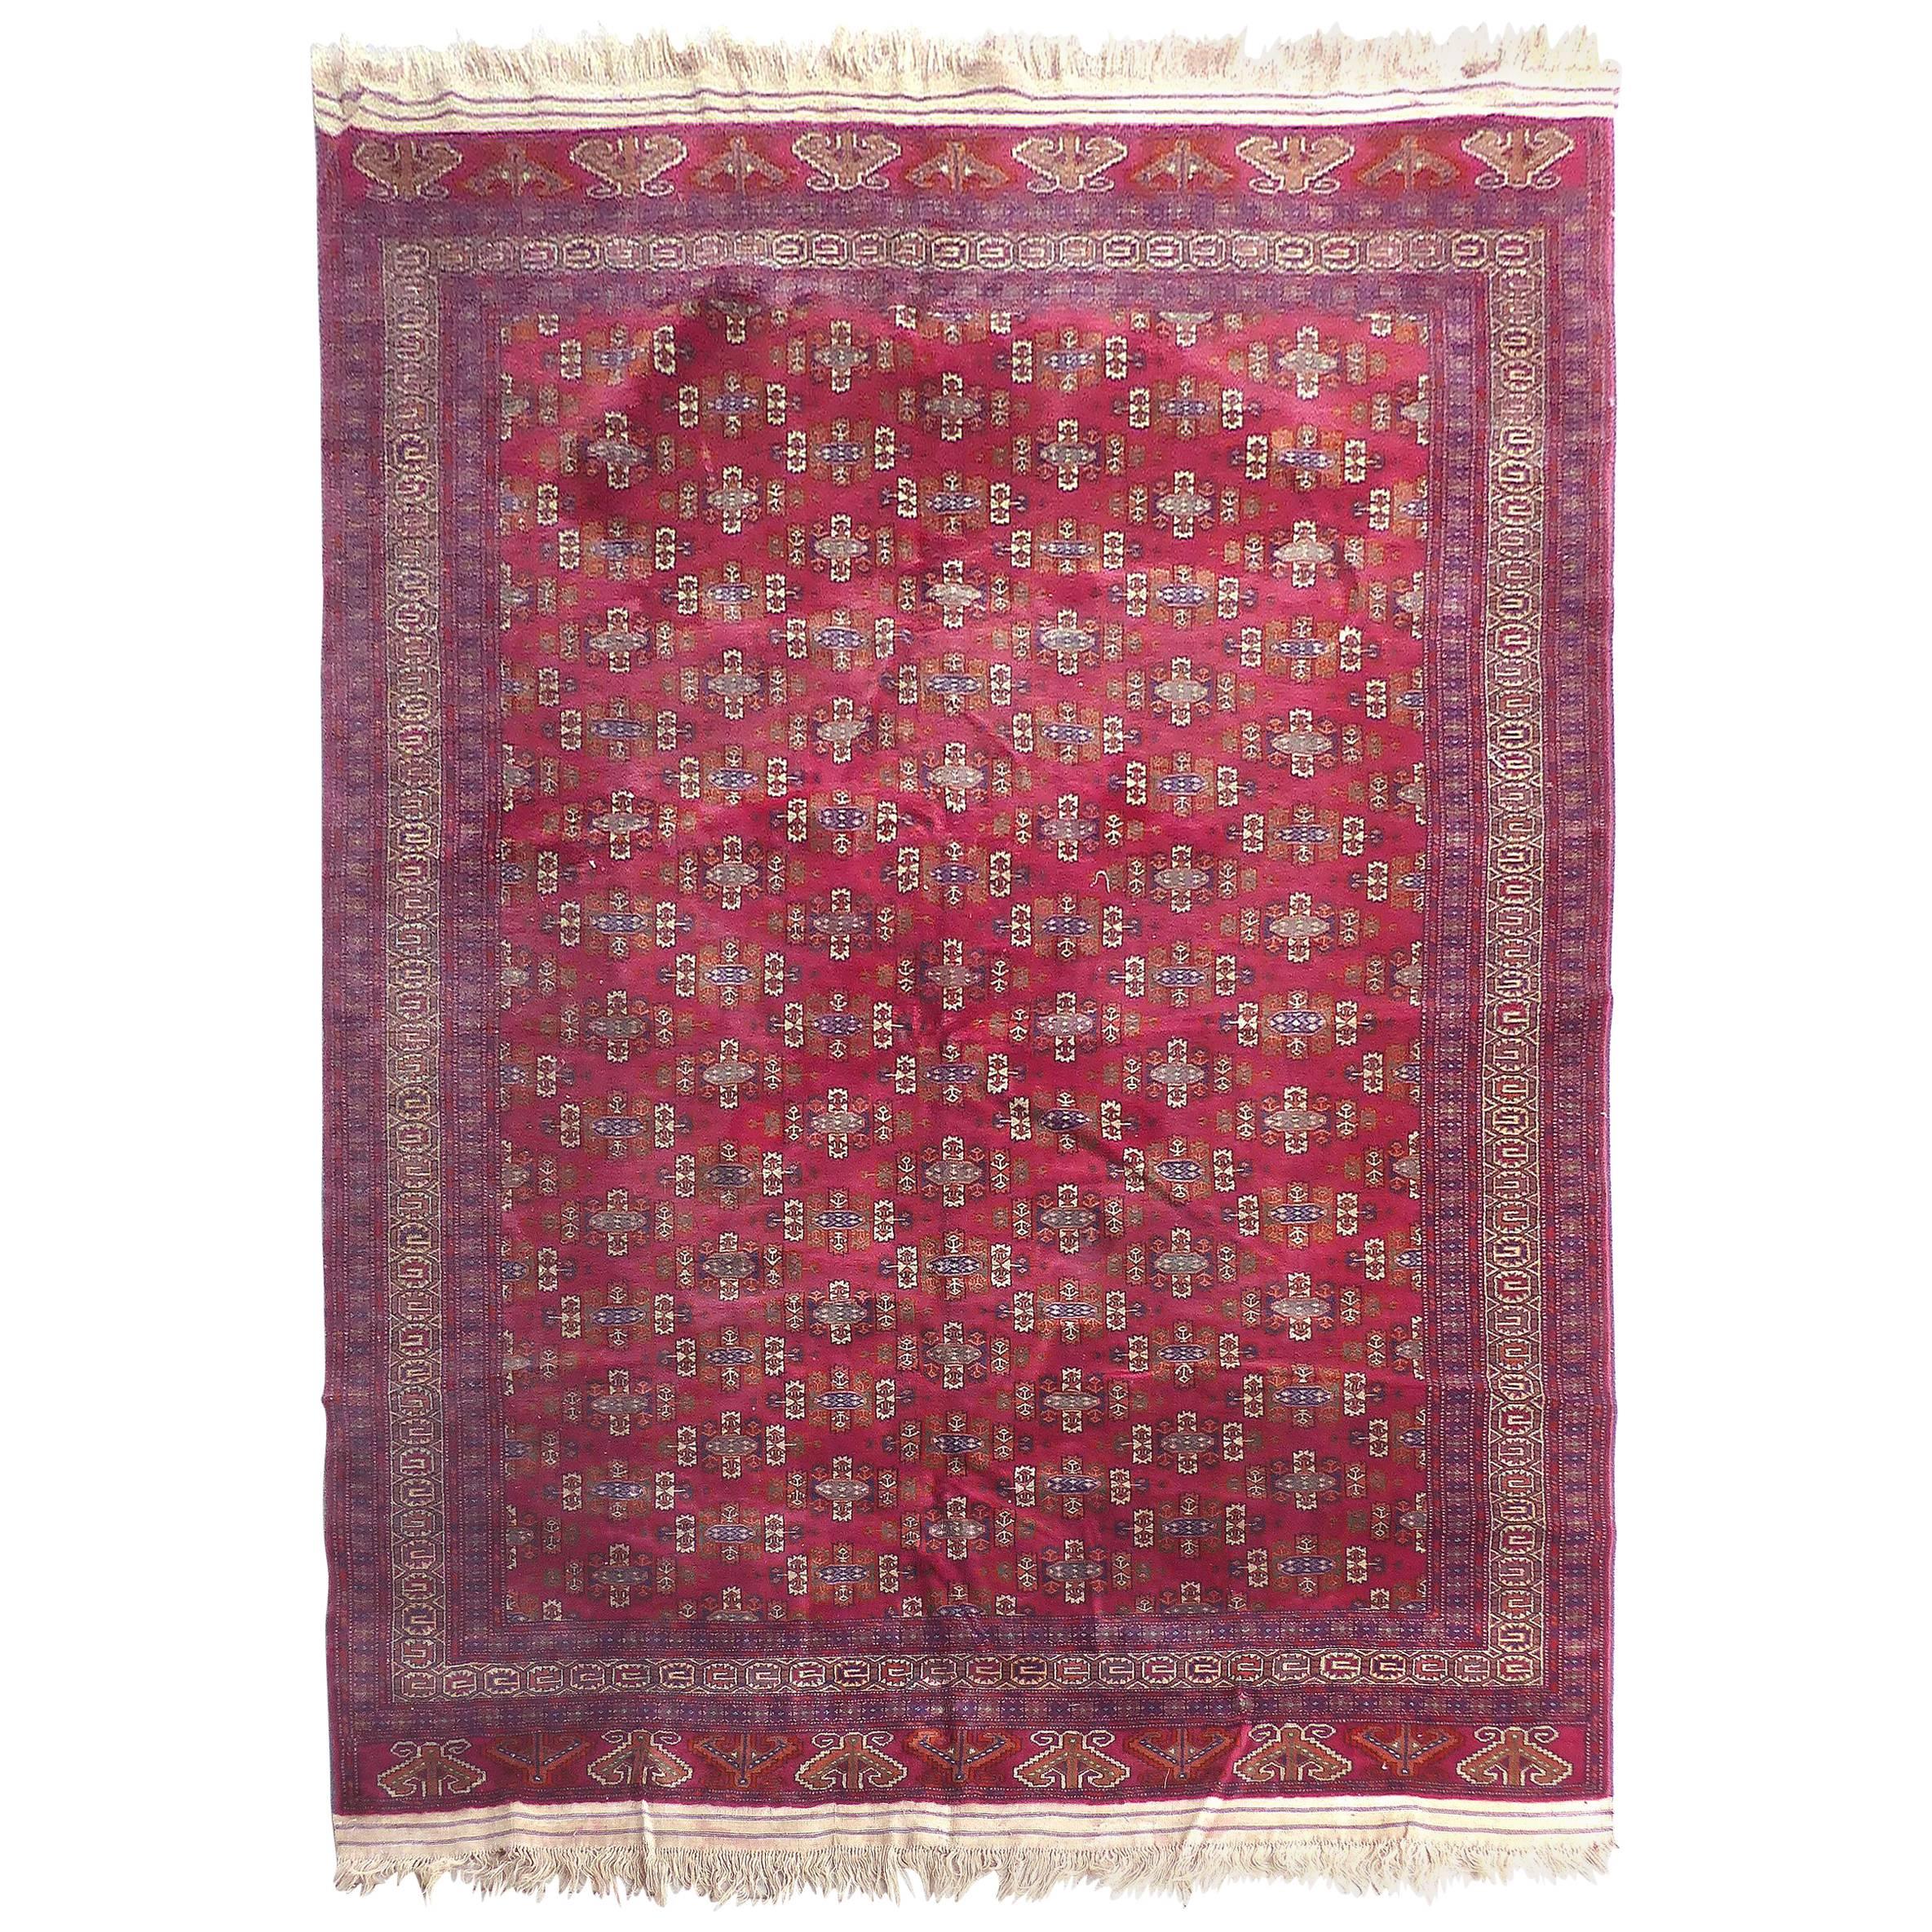 Handwoven Turkoman Armenian Wool and Silk Carpet, Mid-20th Century